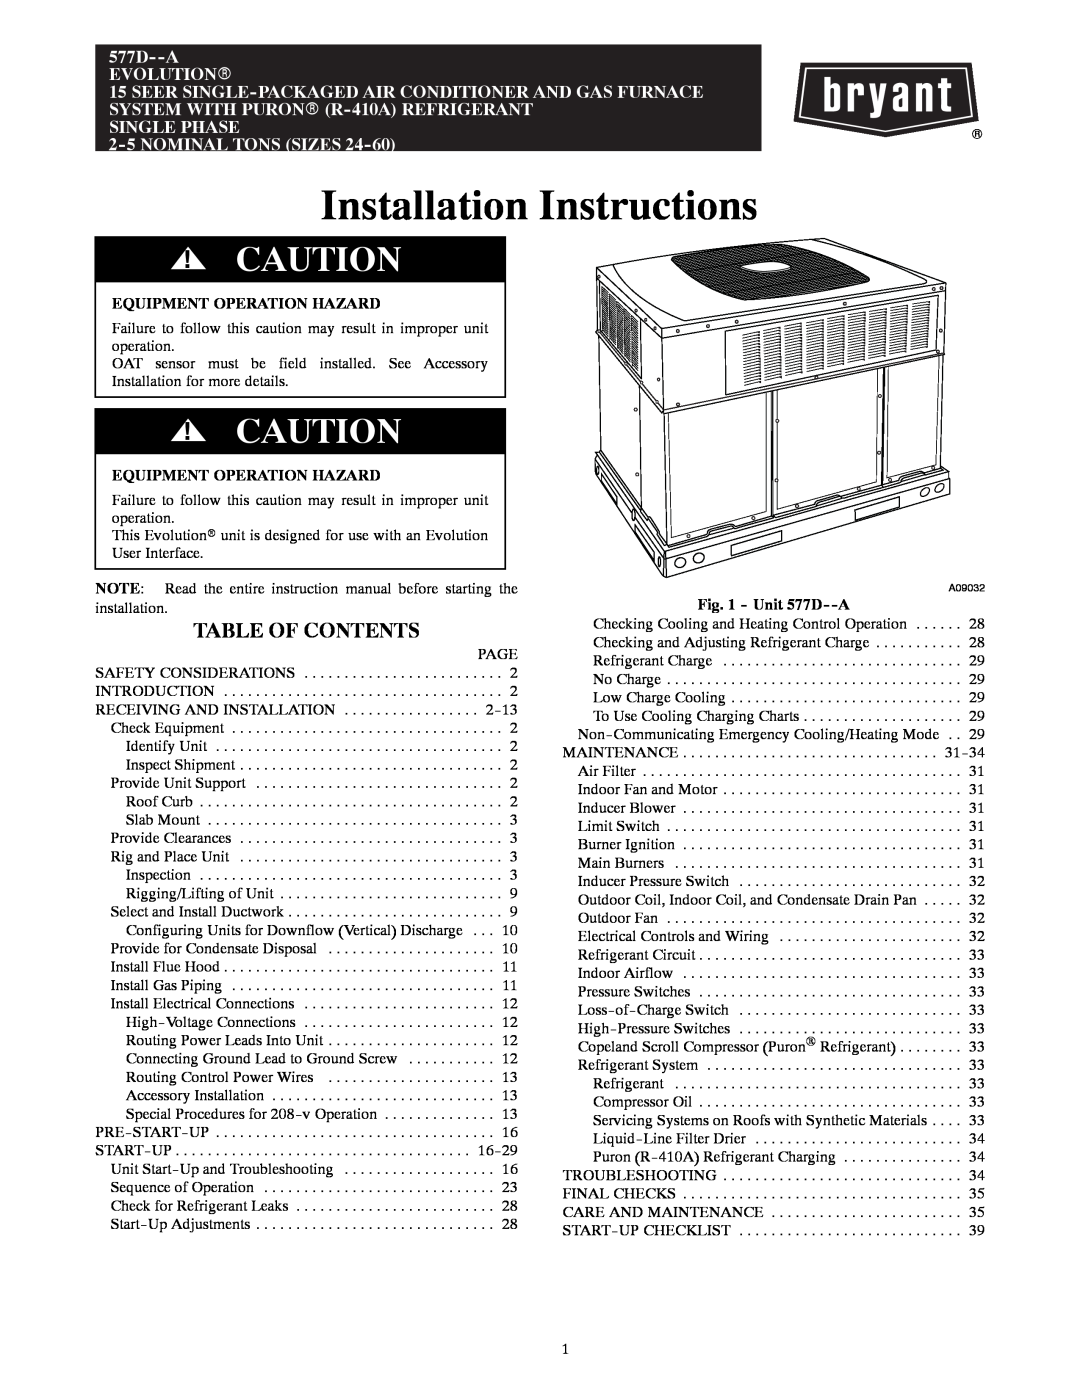 Bryant 577D----A installation instructions Table Of Contents, Equipment Operation Hazard, Unit 577D--A, 577D--AEVOLUTIONR 